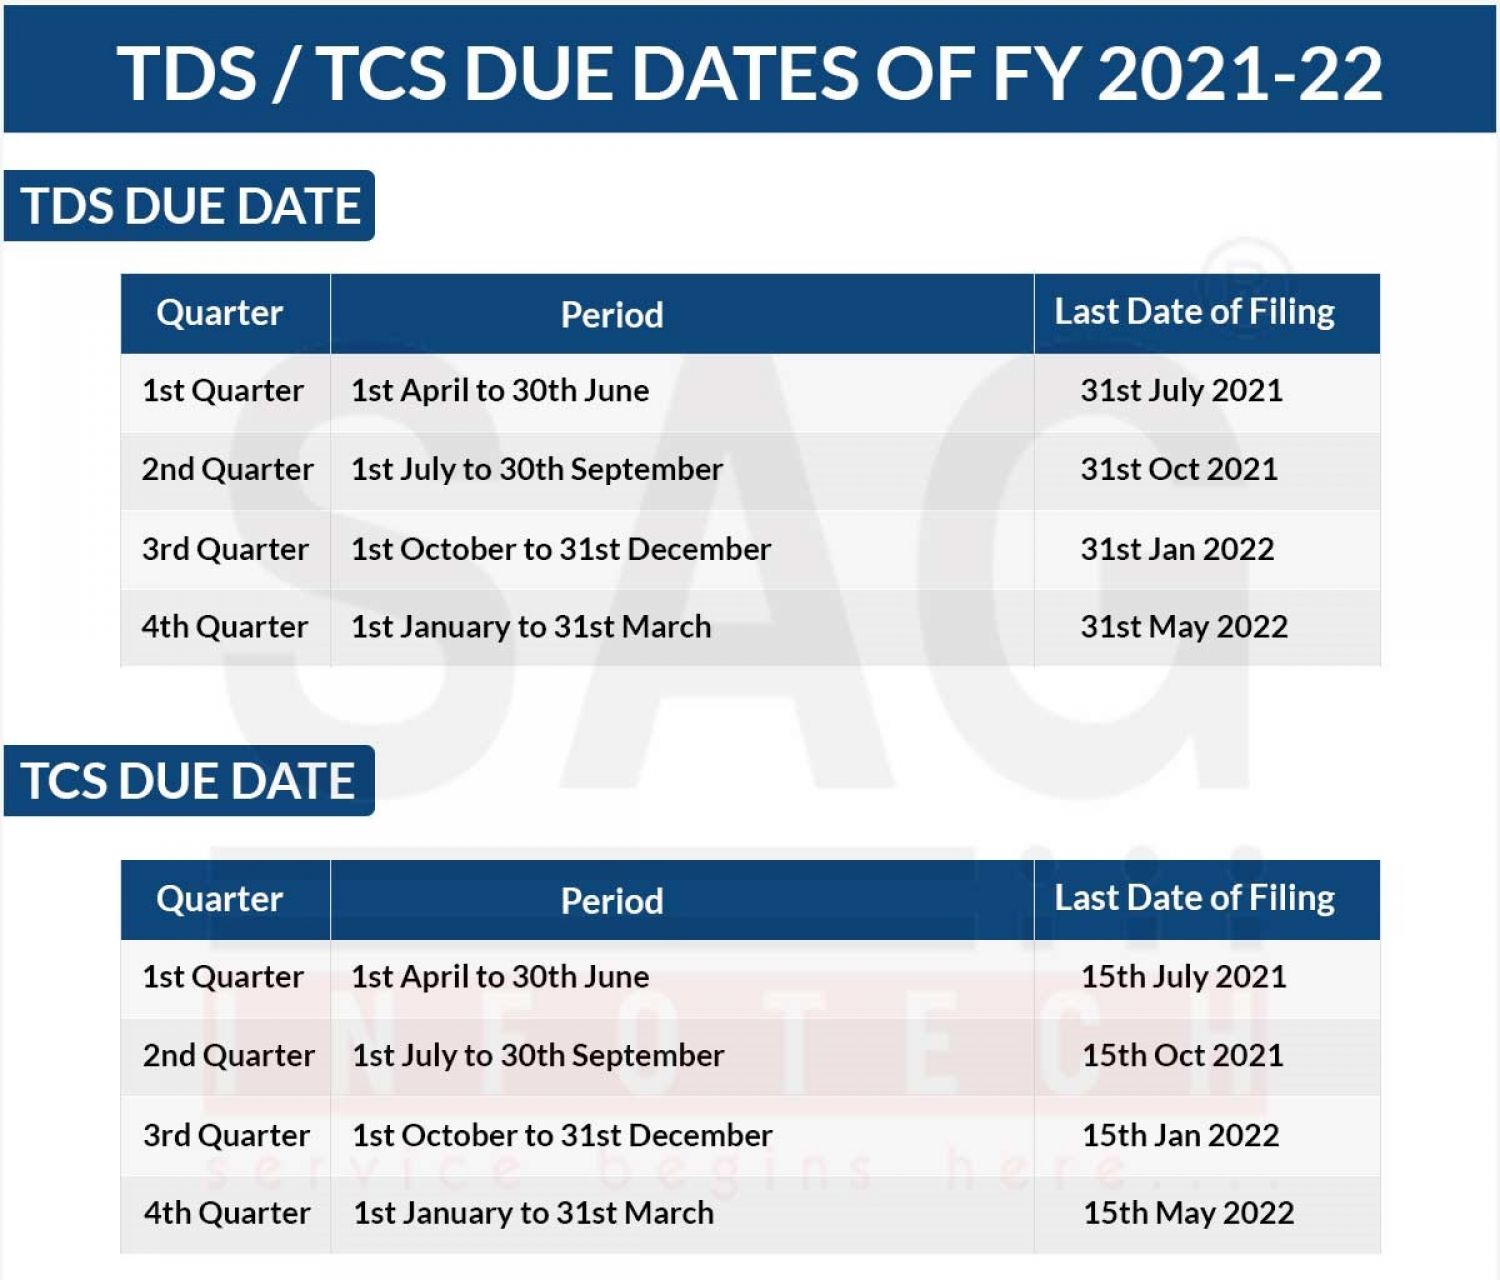 After filing a regular TDS return, we may receive a TDS notice